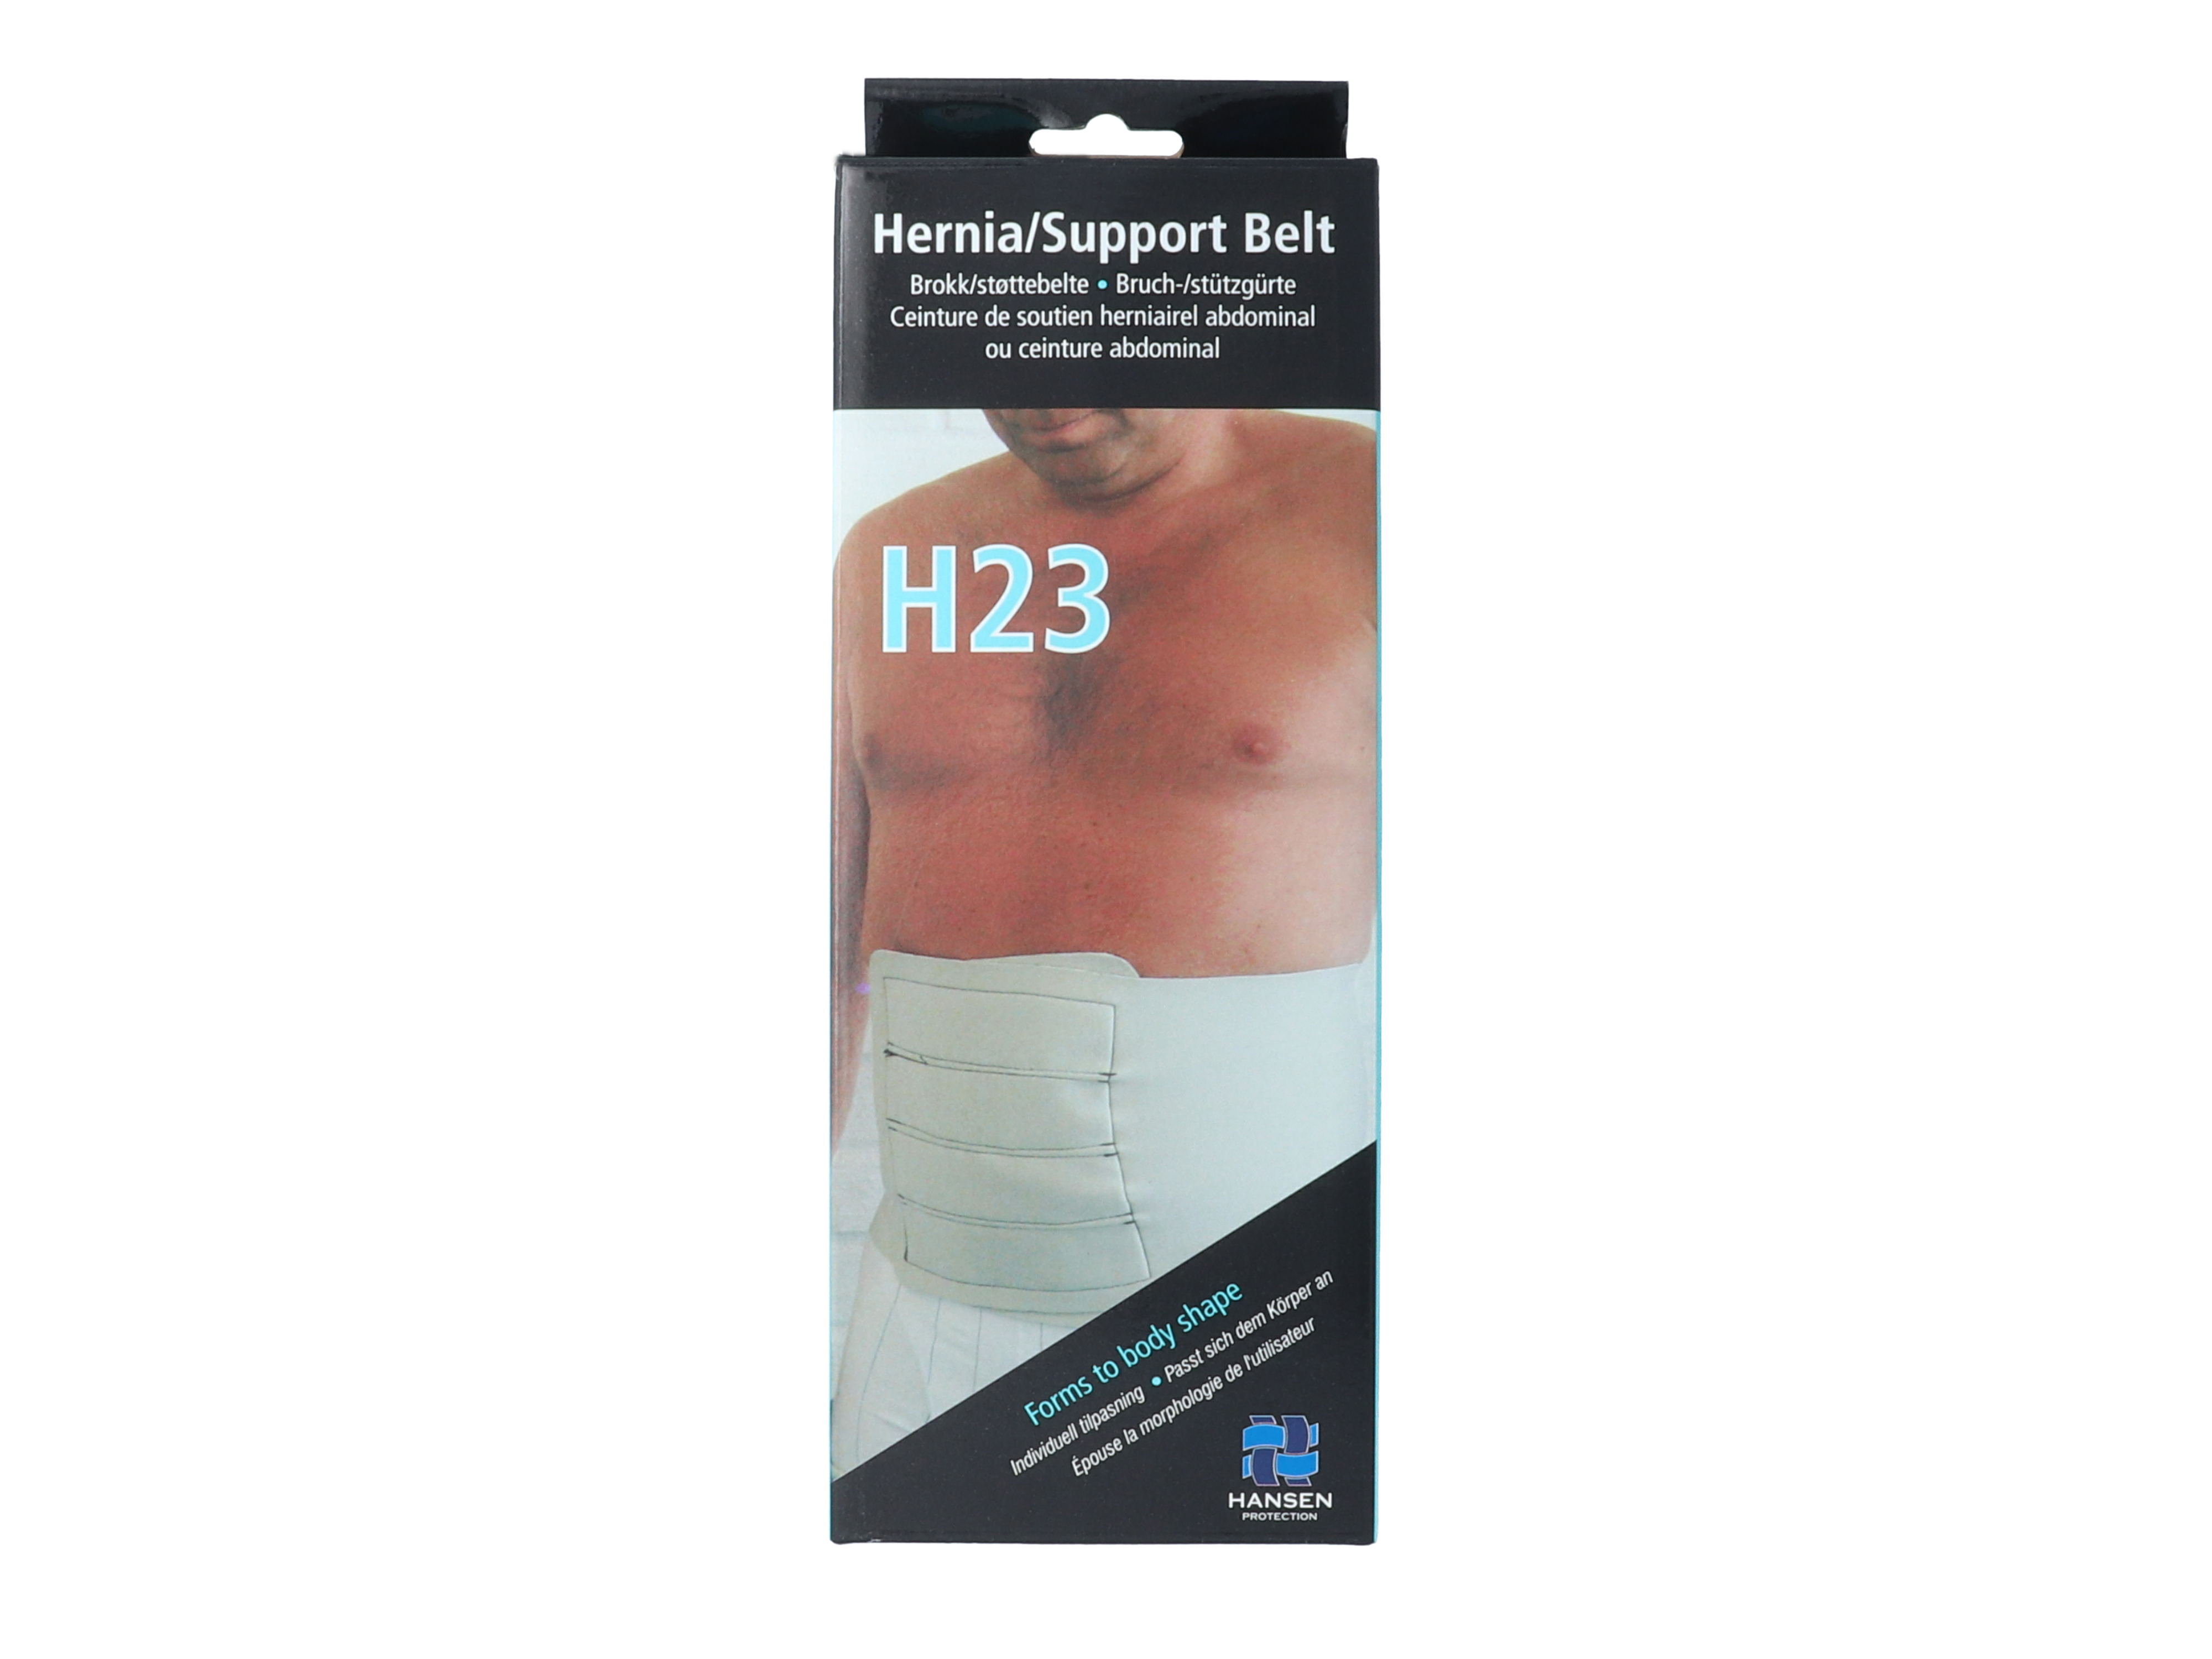 Hansen Protection HH Brokk/støttebelte H23, str XXS, omkrets 60cm, 1 stk.